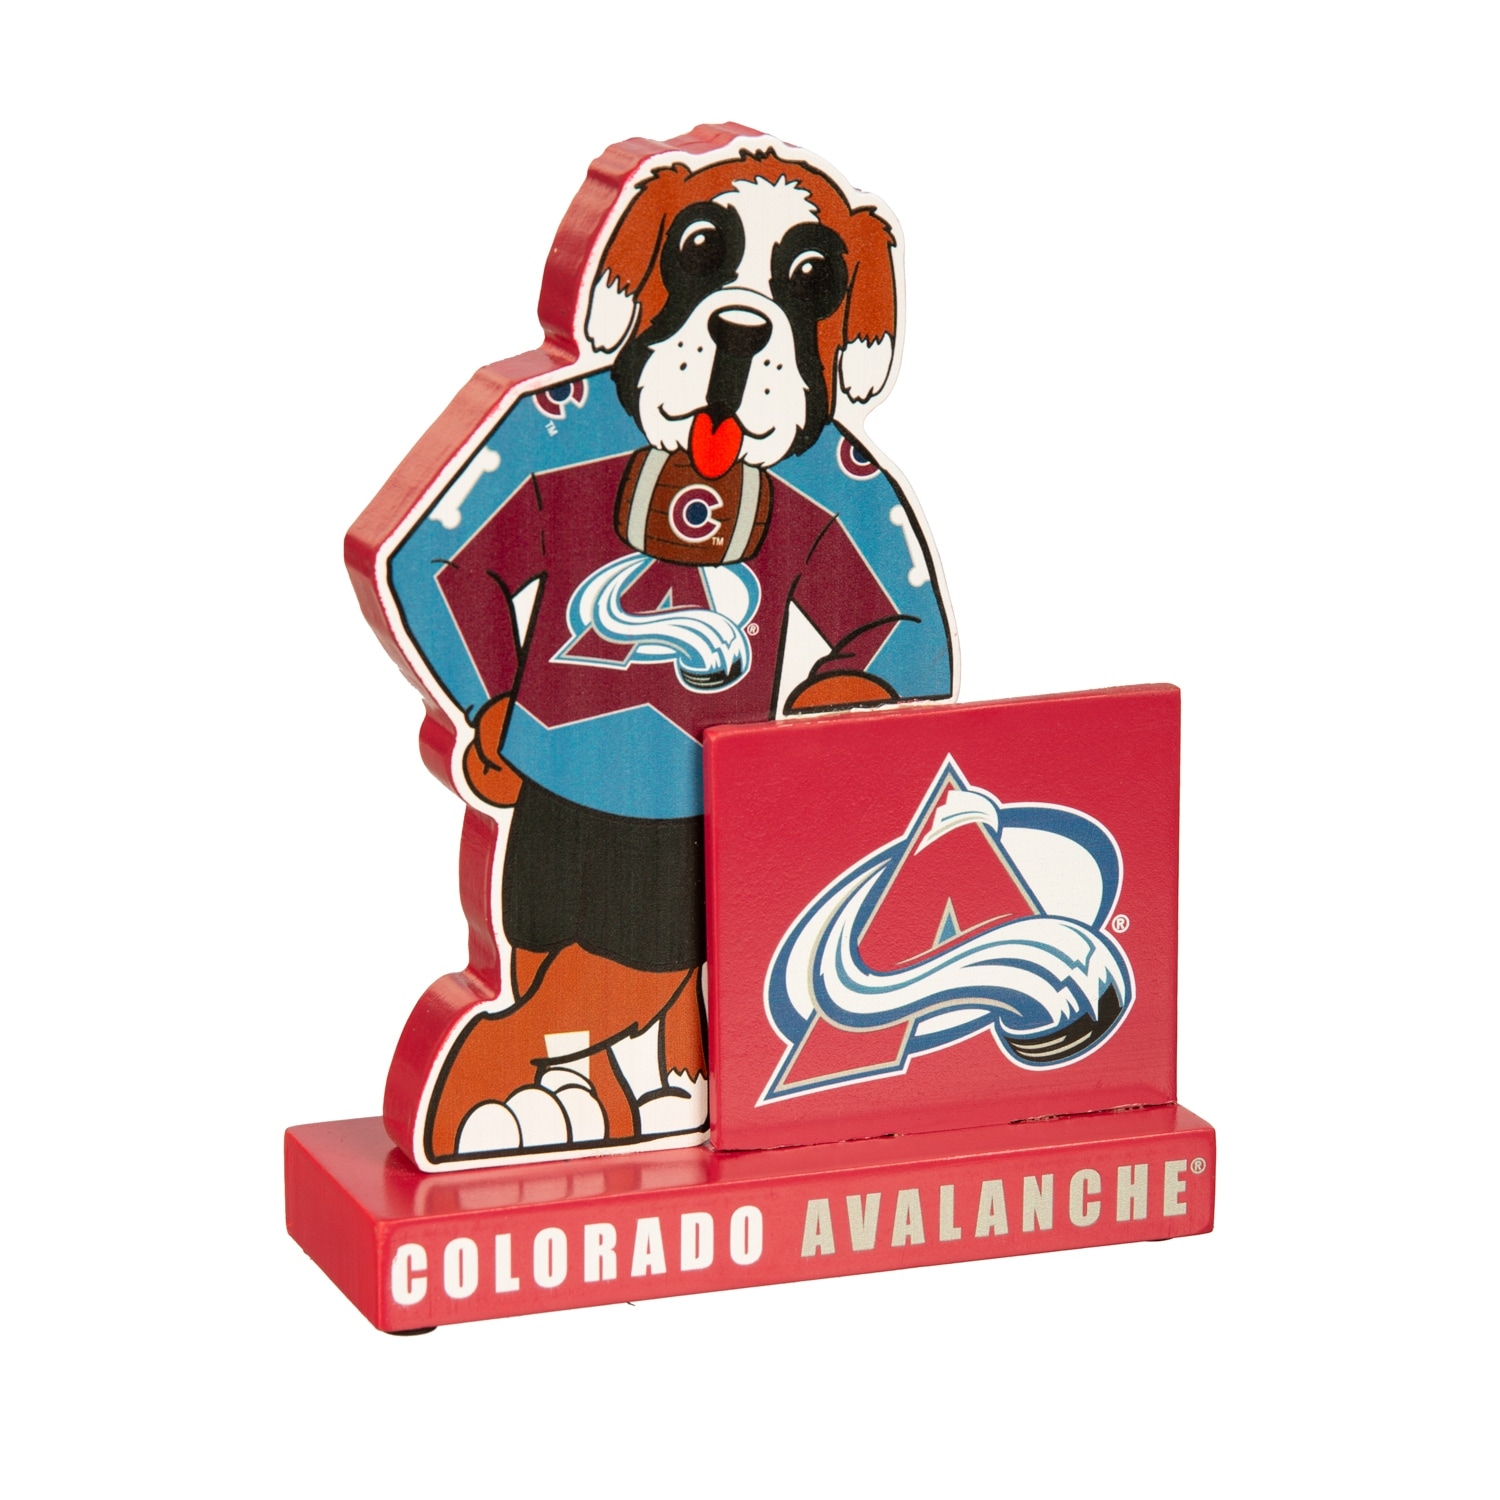 Colorado Avalanche mascot Bernie the St. Bernard in the first